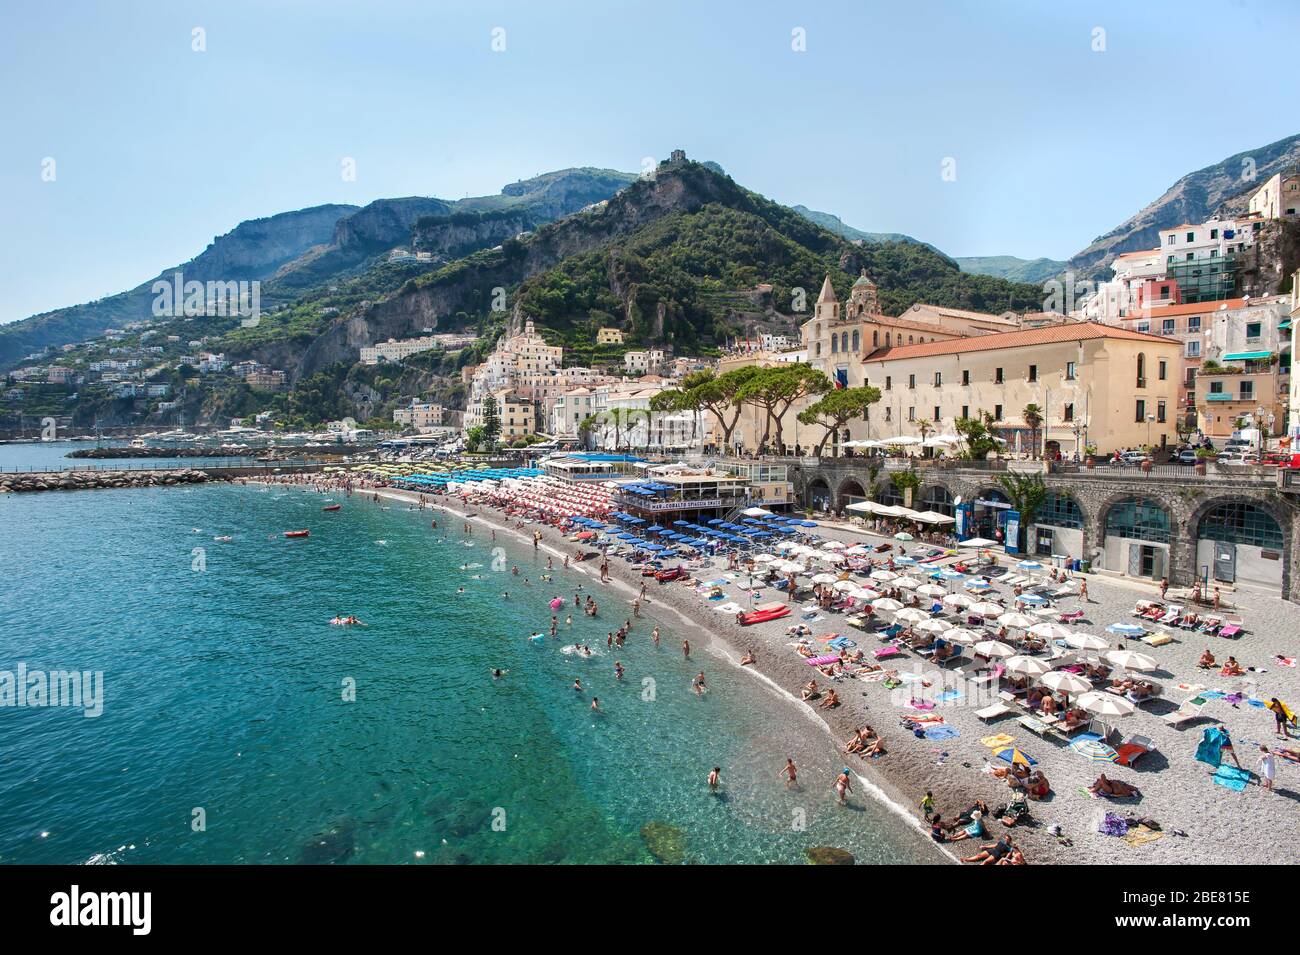 Marina Grande beach in the town of Amalfi on the Amalfi Coast, Italy Stock Photo